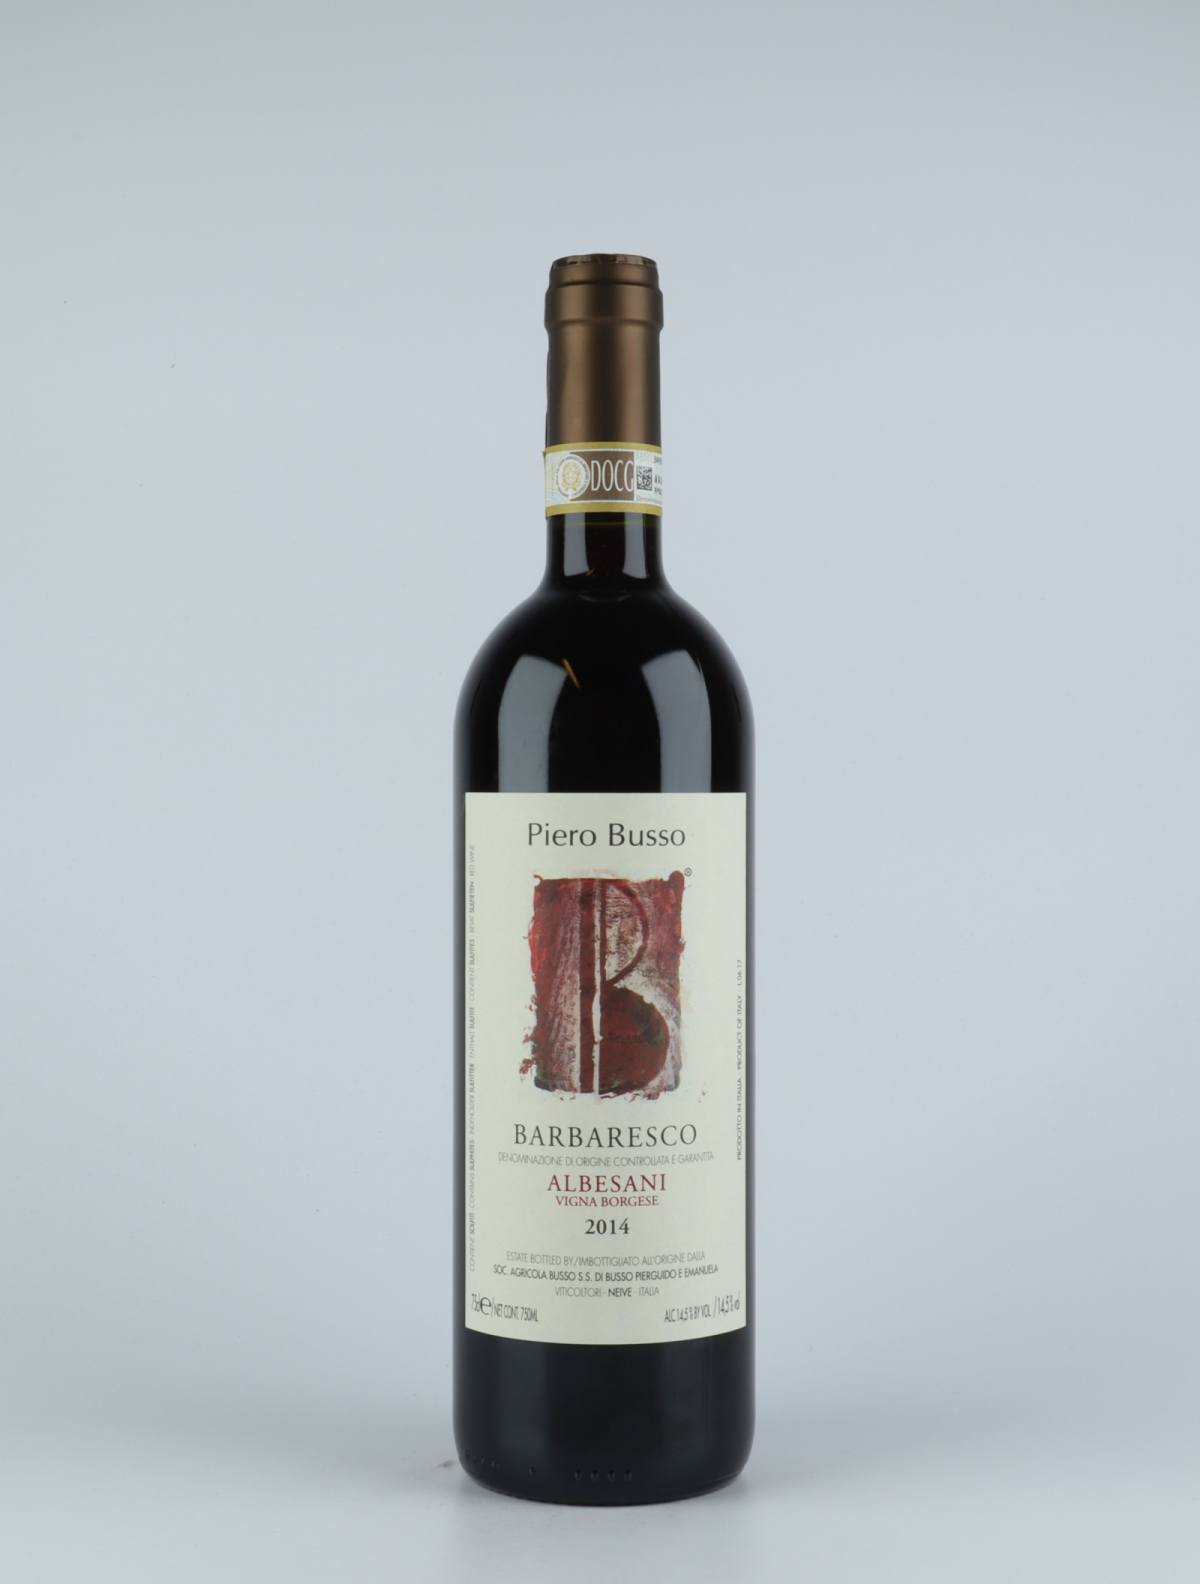 En flaske 2014 Barbaresco Albesani Vigna Borgese Rødvin fra Piero Busso, Piemonte i Italien